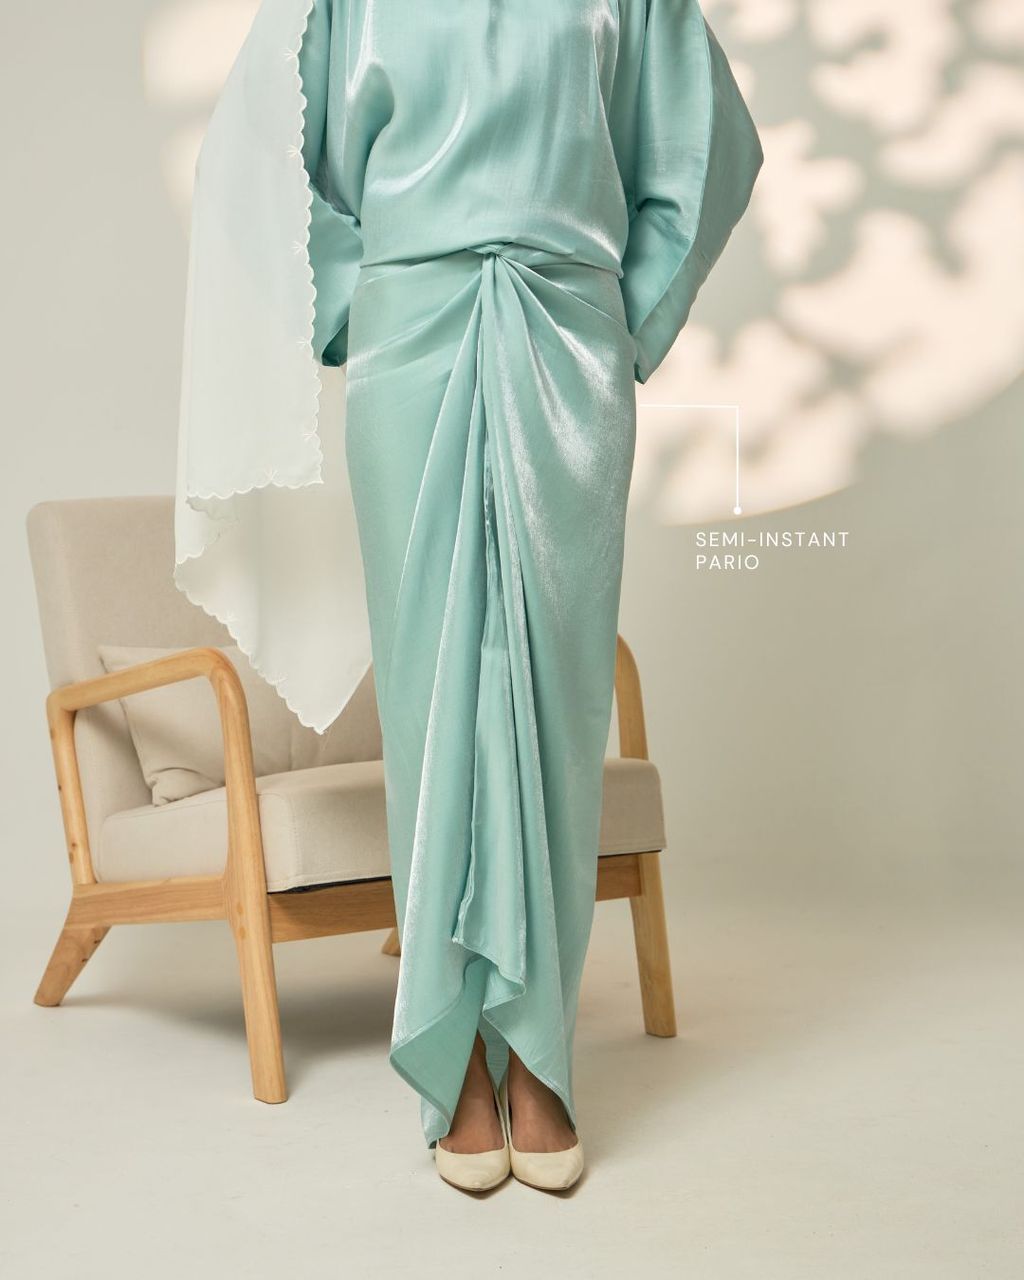 haura-wear-dewi-skirt-set-sulam-embroidery-pario-klasik-tradisional-mini kebaya-fabrik eyelet-raya-muslimah-long-sleeve-baju-skirt-kain-perempuan-baju-sepasang (22)